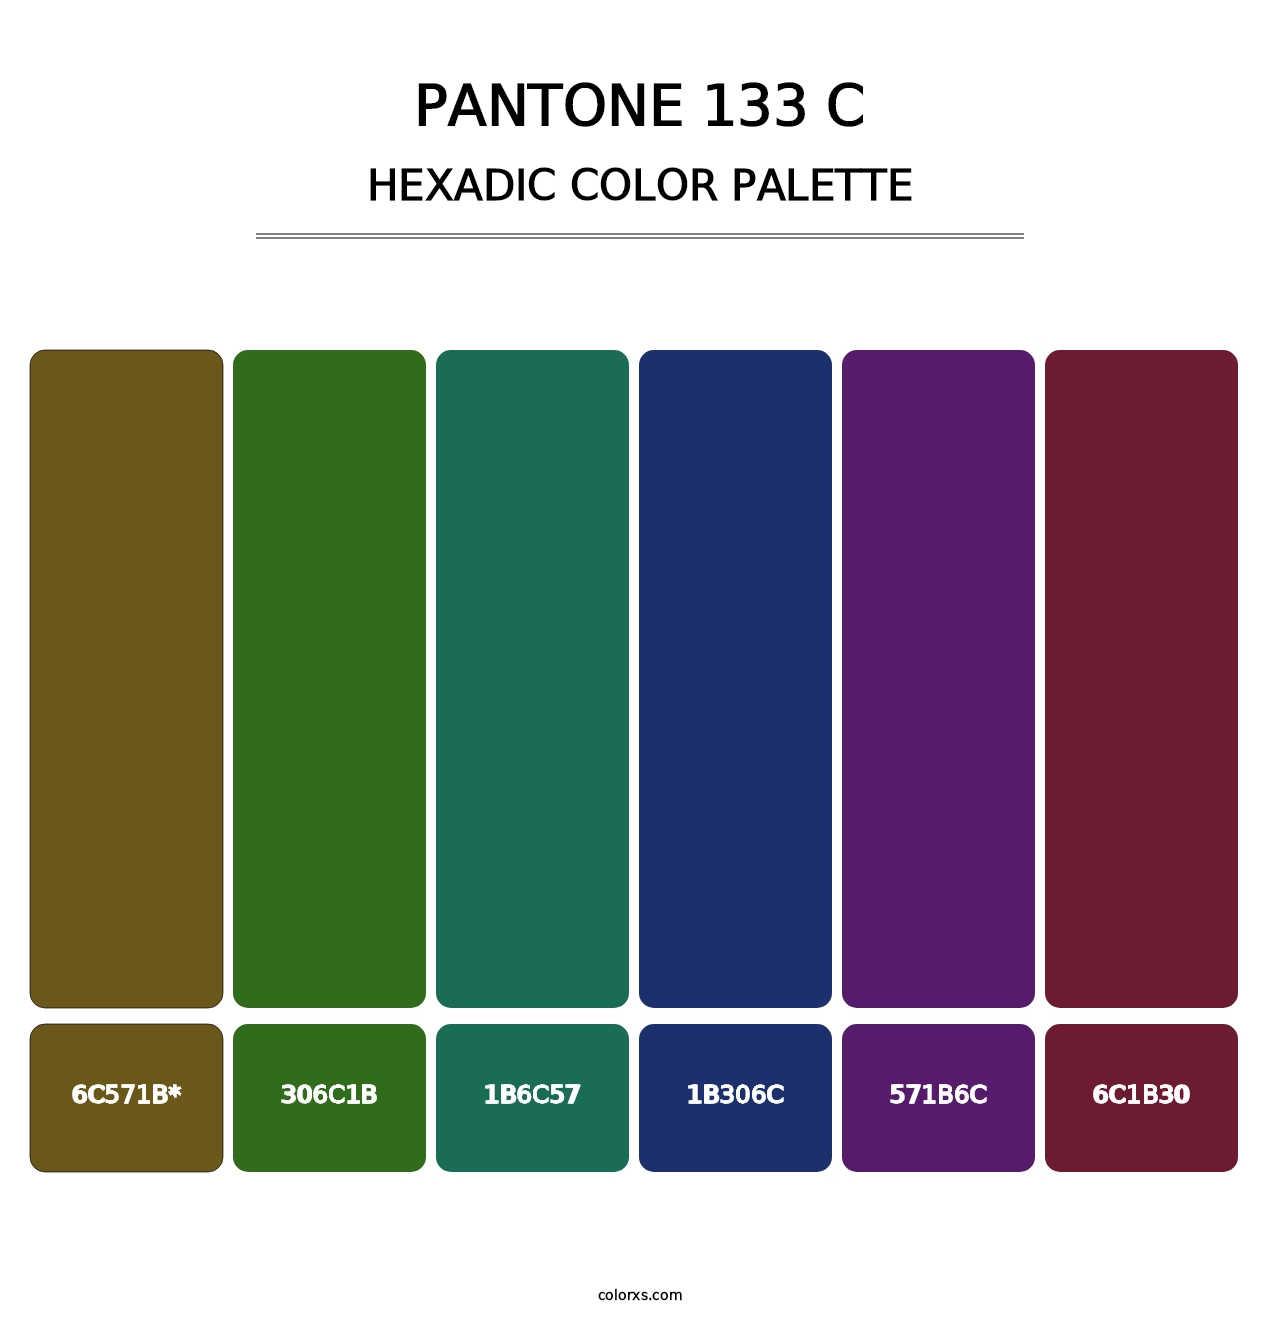 PANTONE 133 C - Hexadic Color Palette